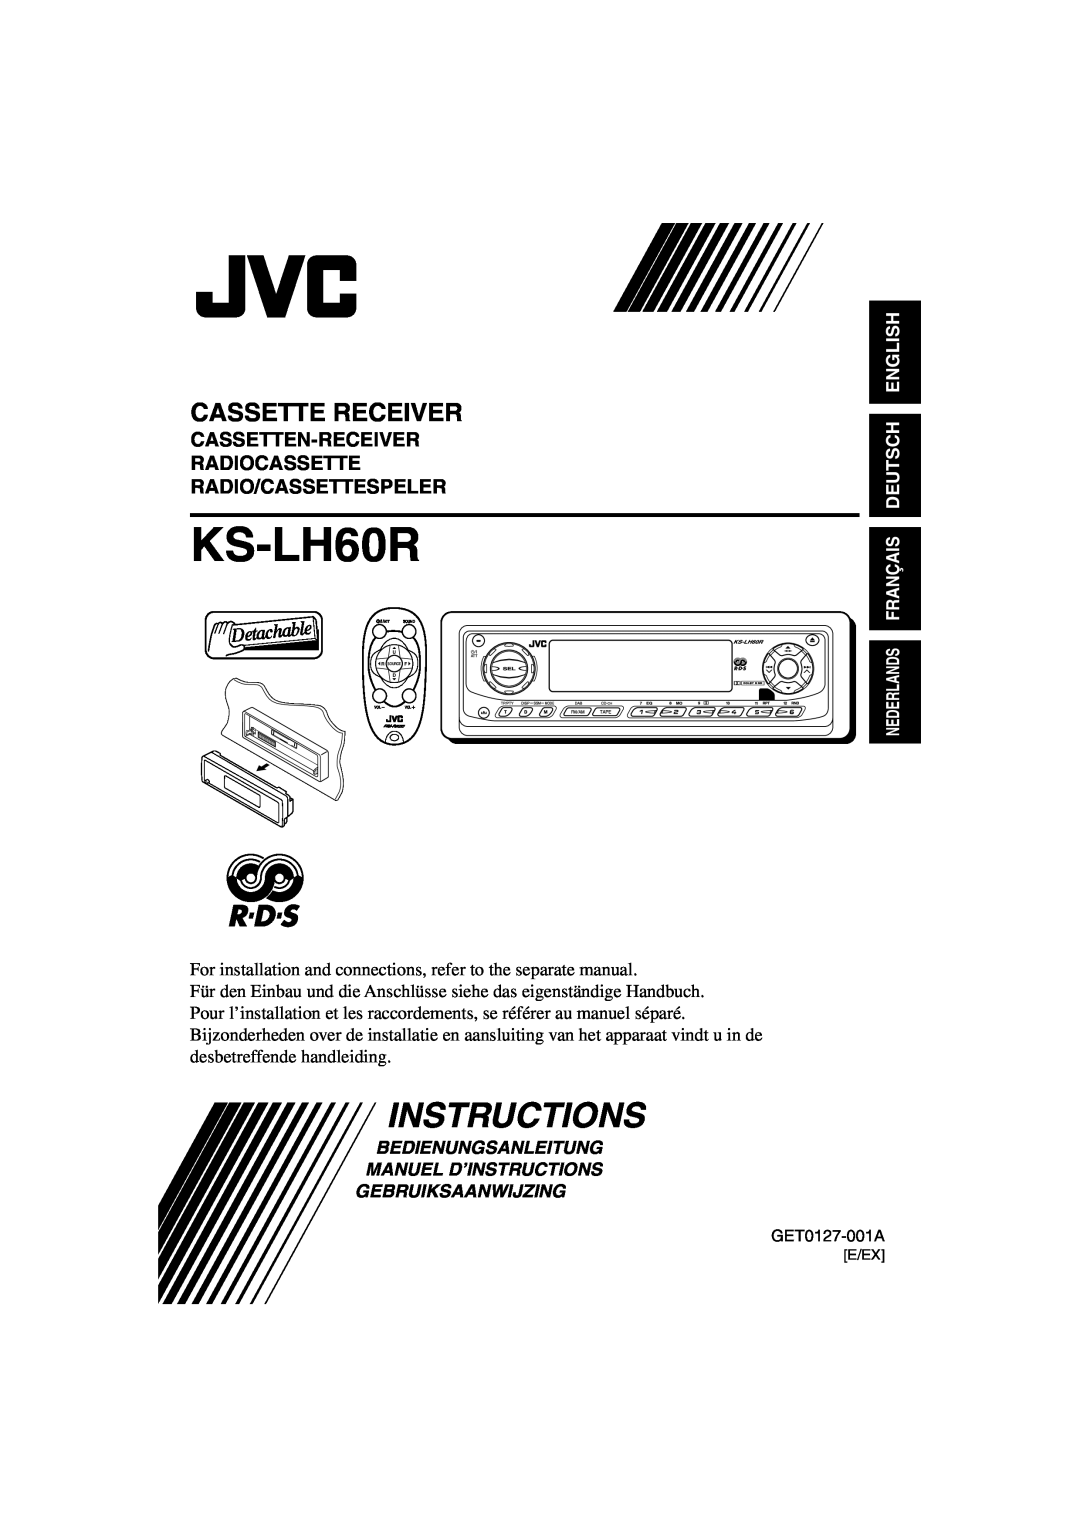 JVC KS-LH60R manual Cassette Receiver, Cassetten-Receiver Radiocassette Radio/Cassettespeler, Instructions 